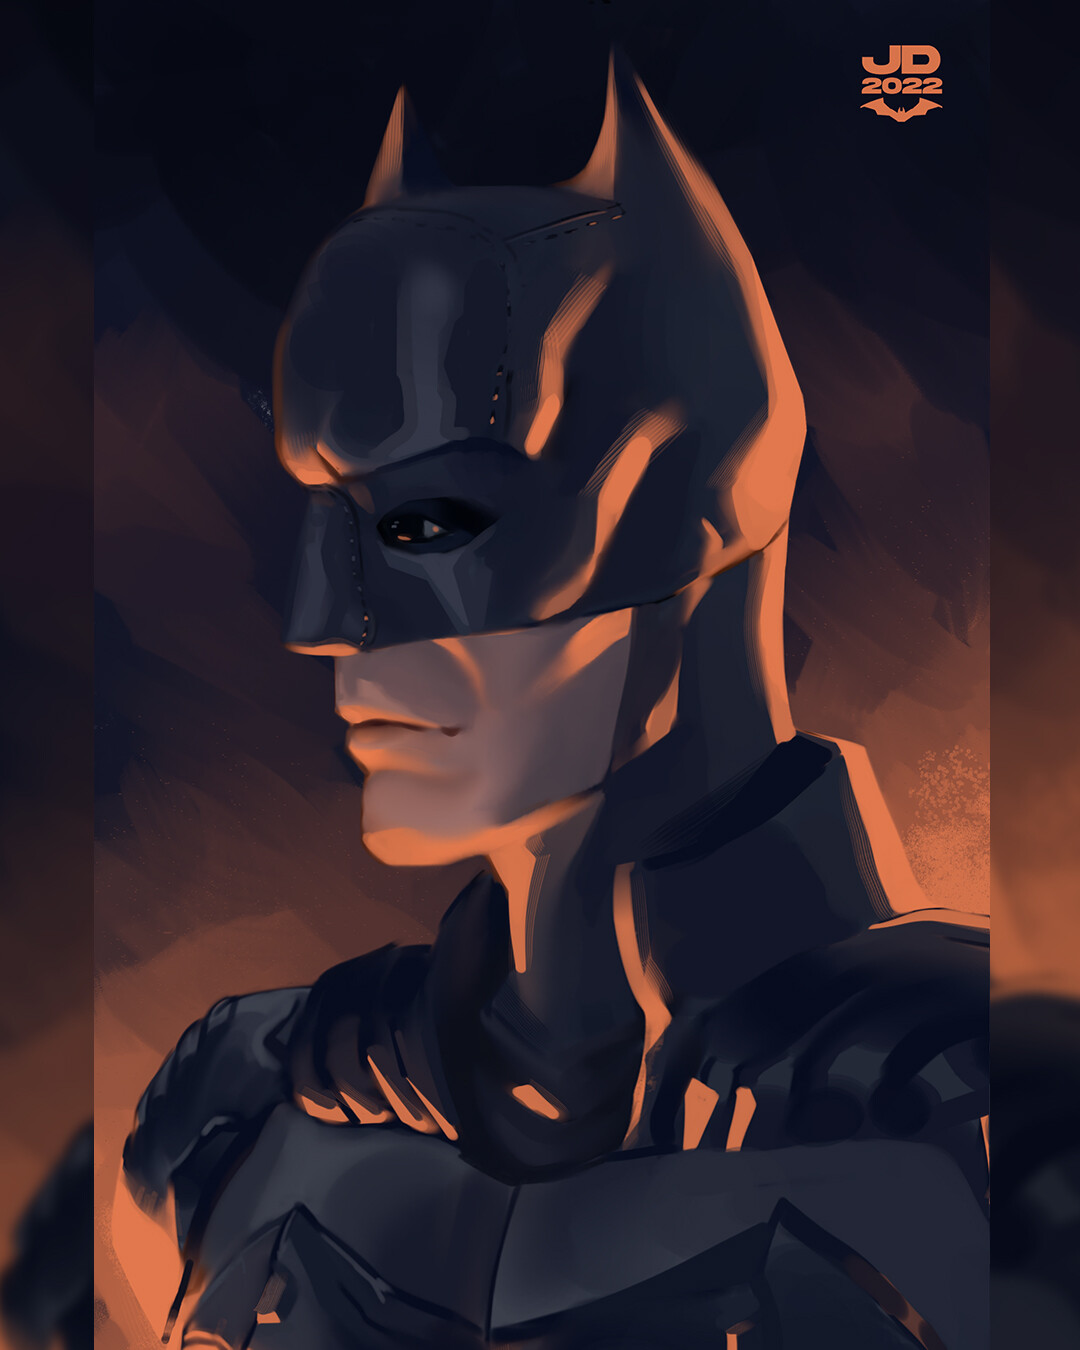 ArtStation - The Batman